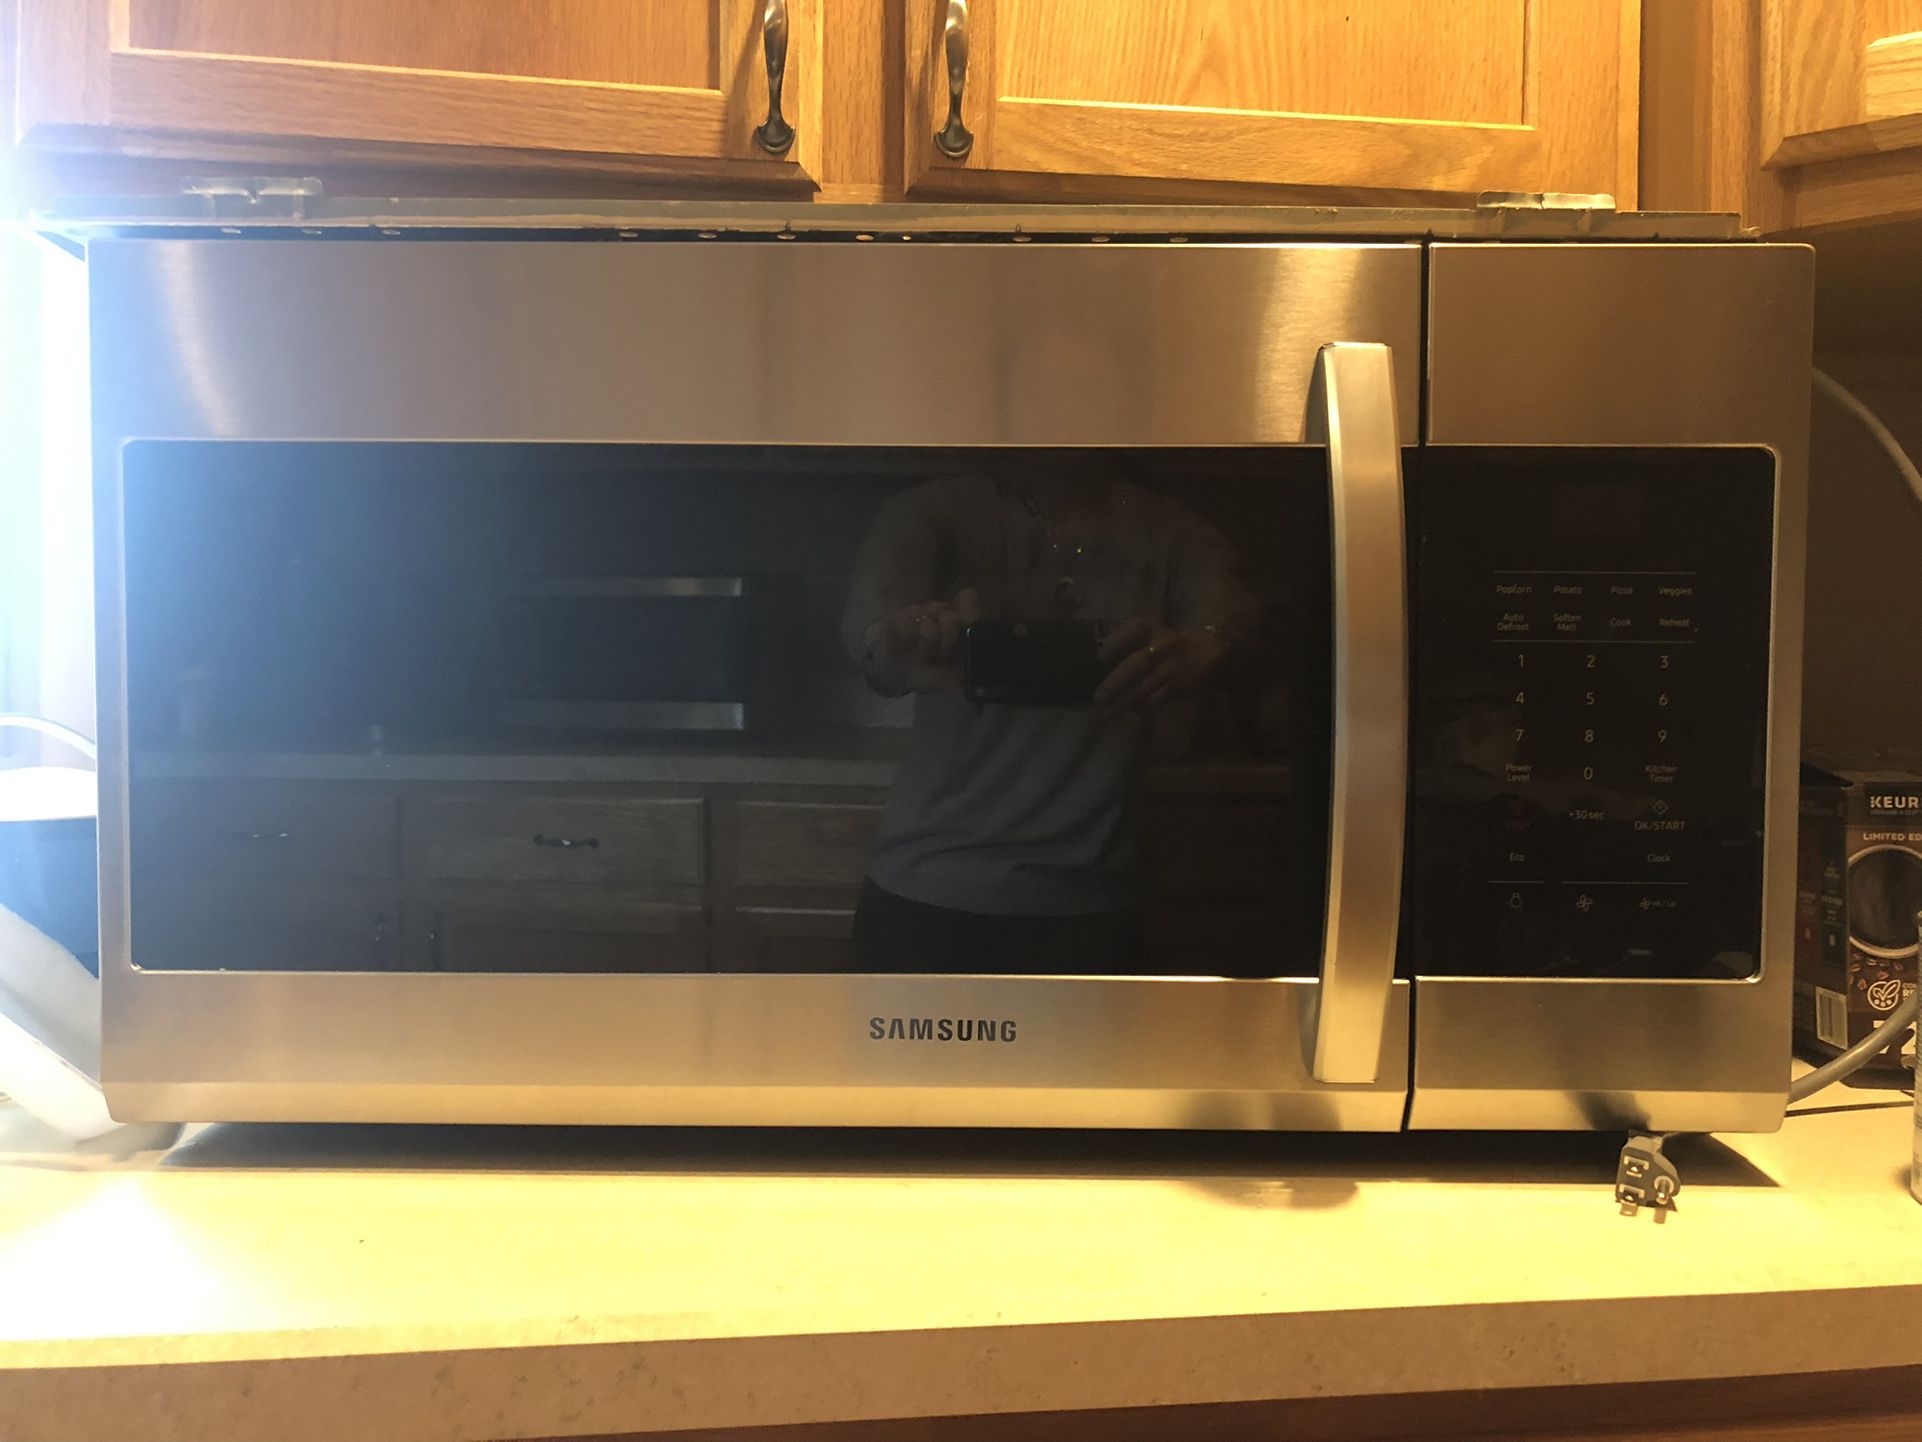 Samsung Microwave Oven range 